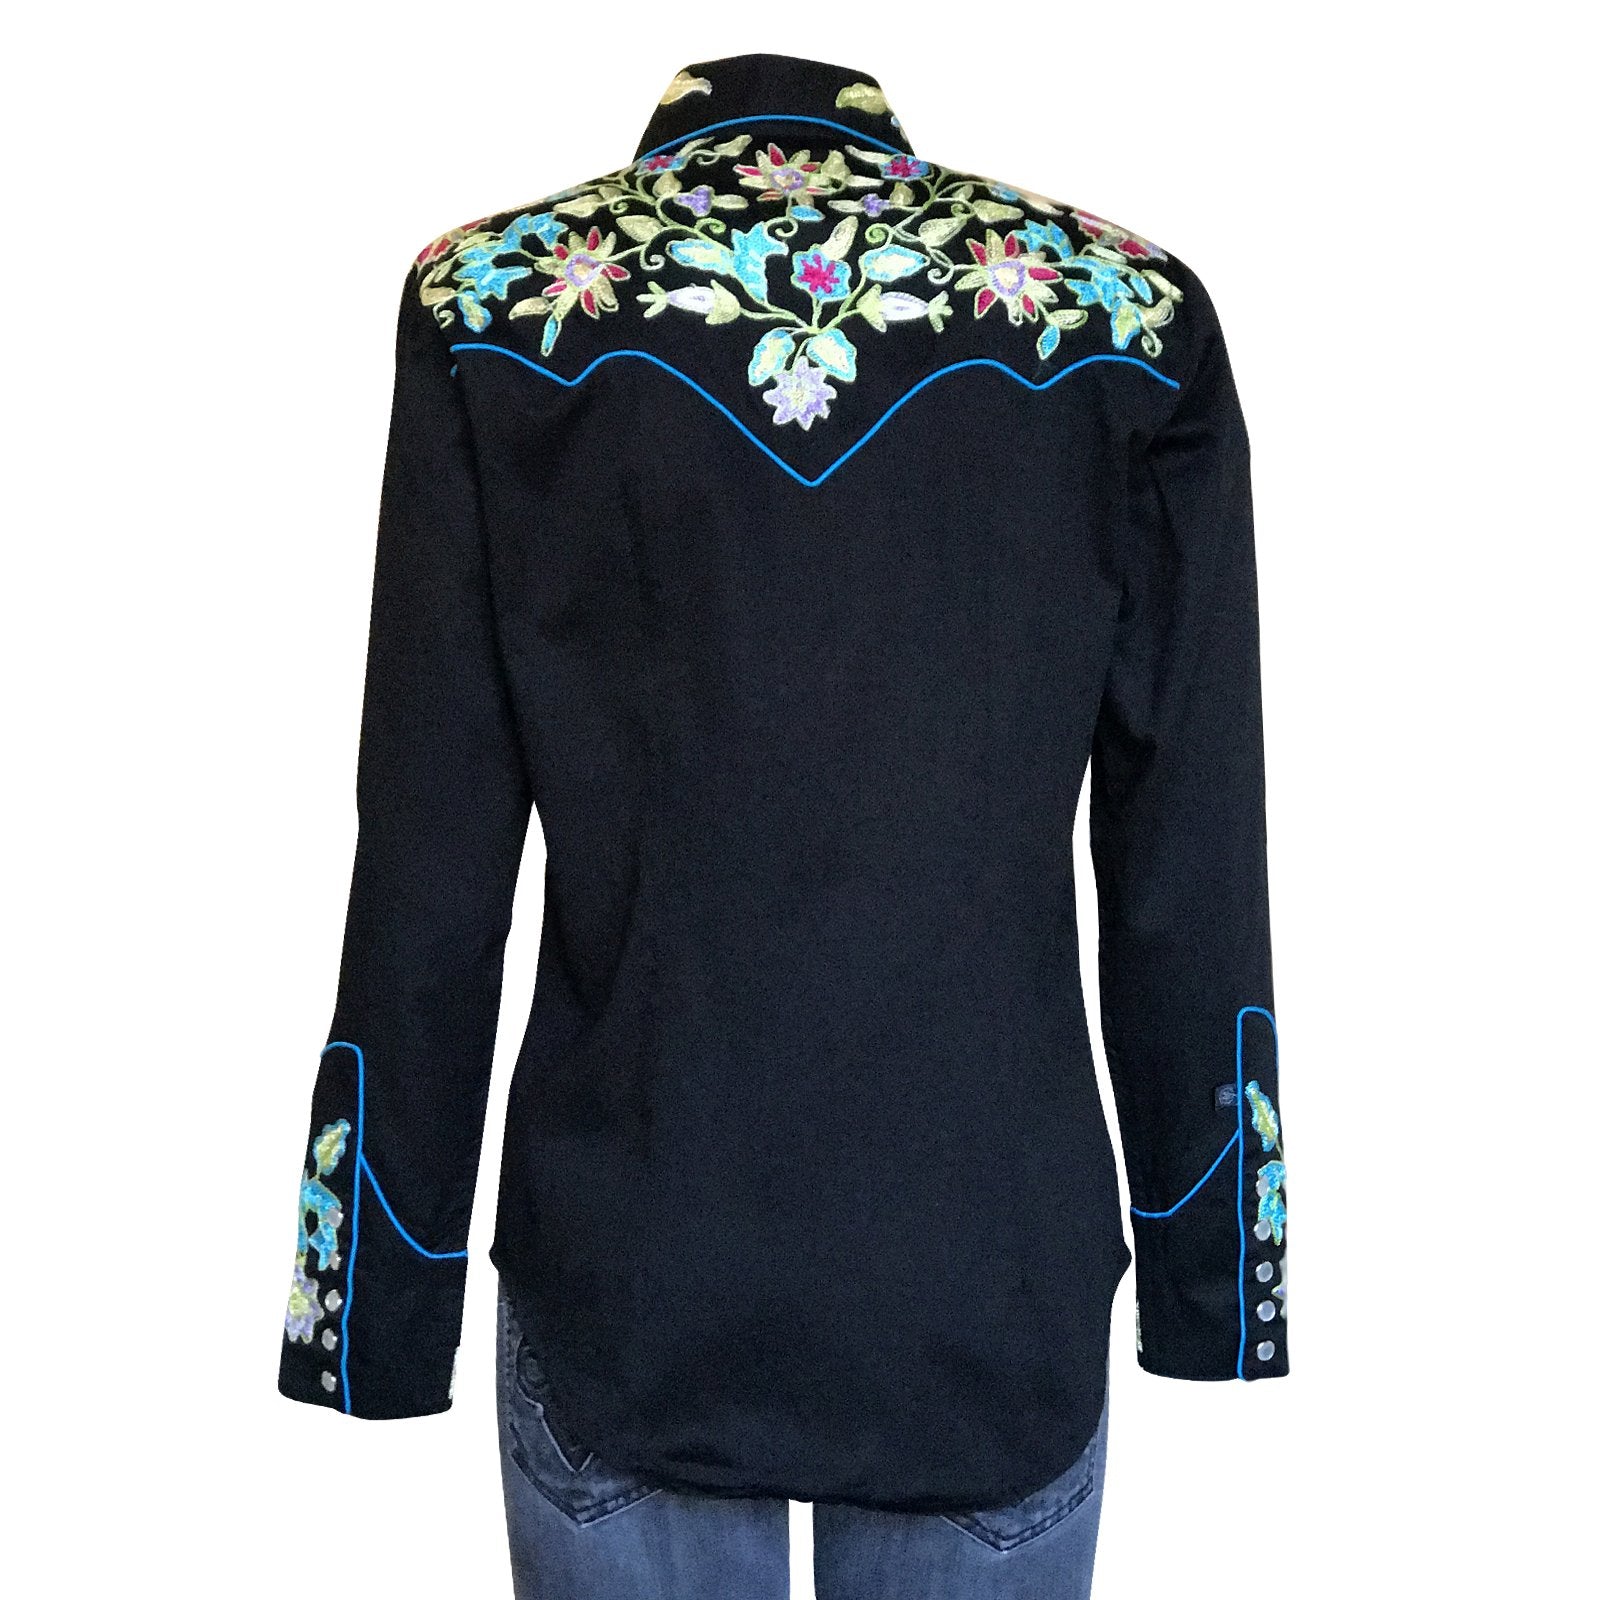 Vintage Inspired Western Shirt Ladies Rockmount Floral Embroidery Black Back on Mannequin